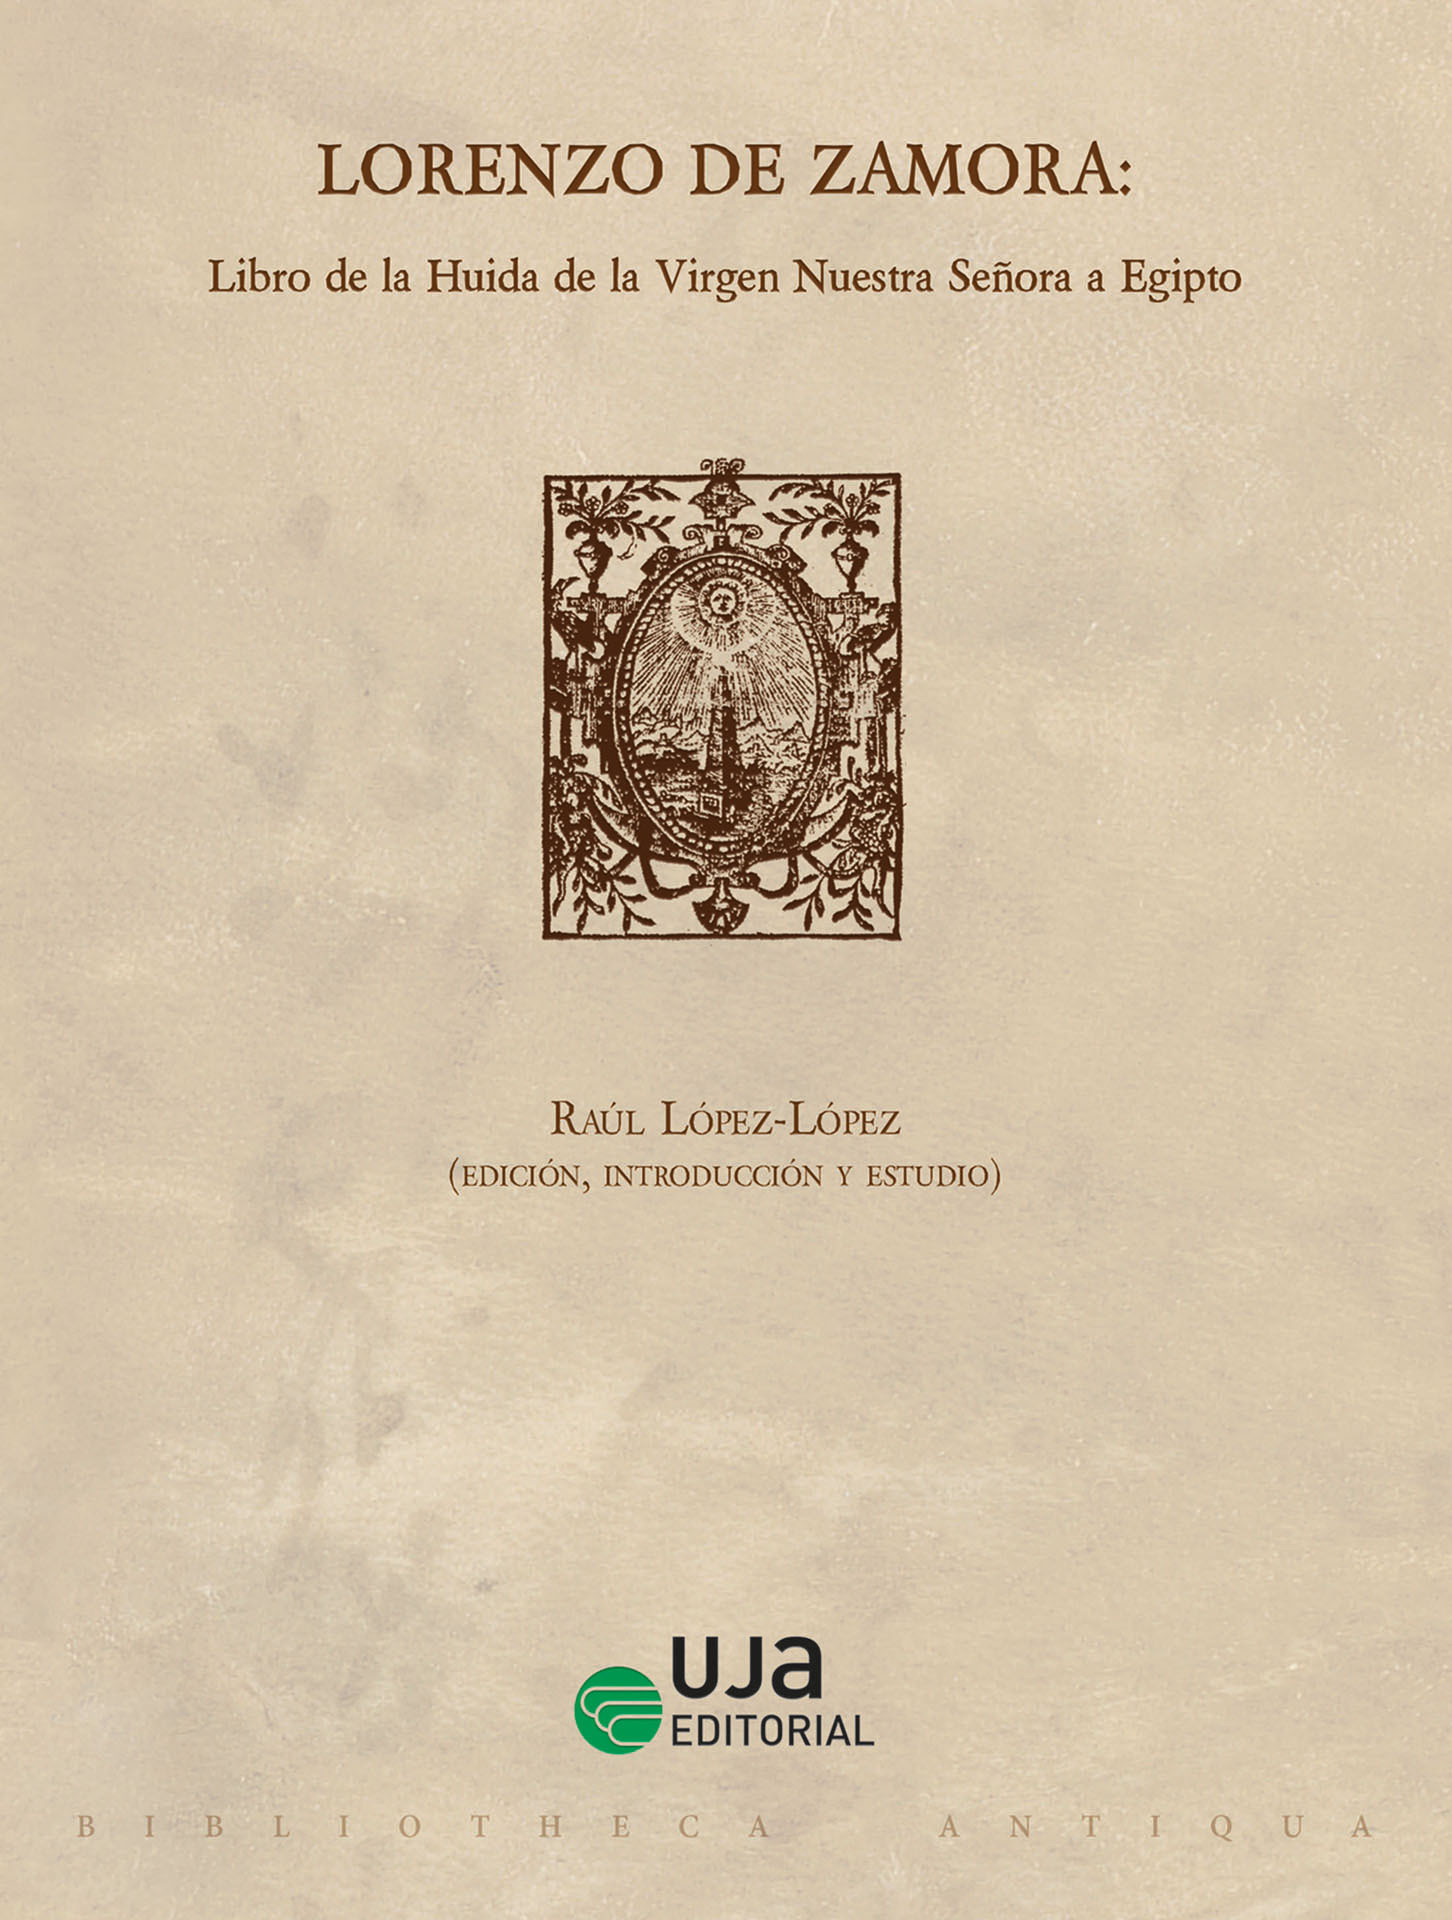 Imagen de portada del libro Lorenzo de Zamora